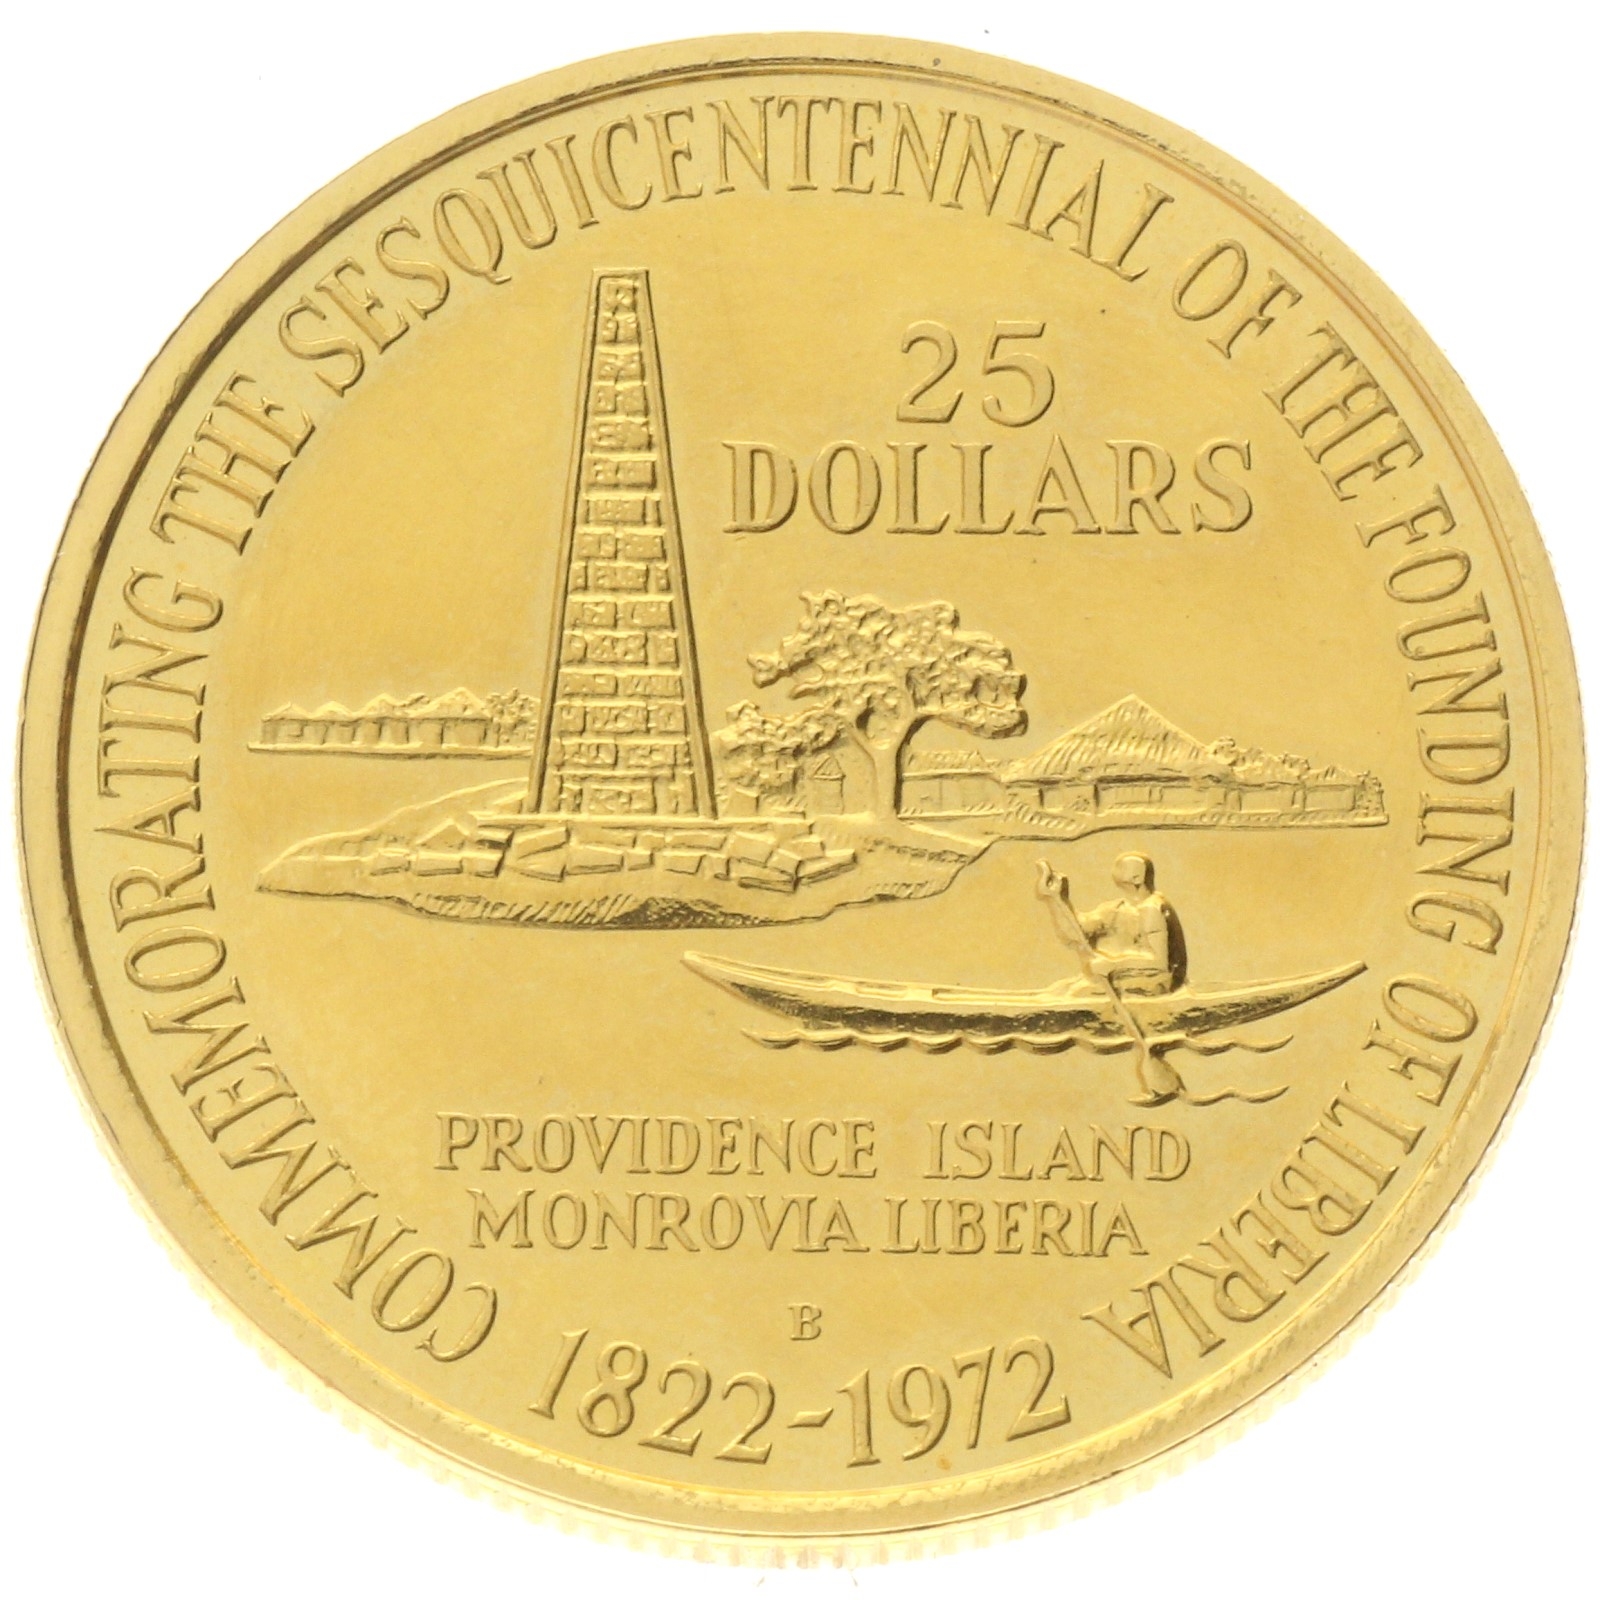 Liberia - 25 dollars - 1972 - B - President Tolbert